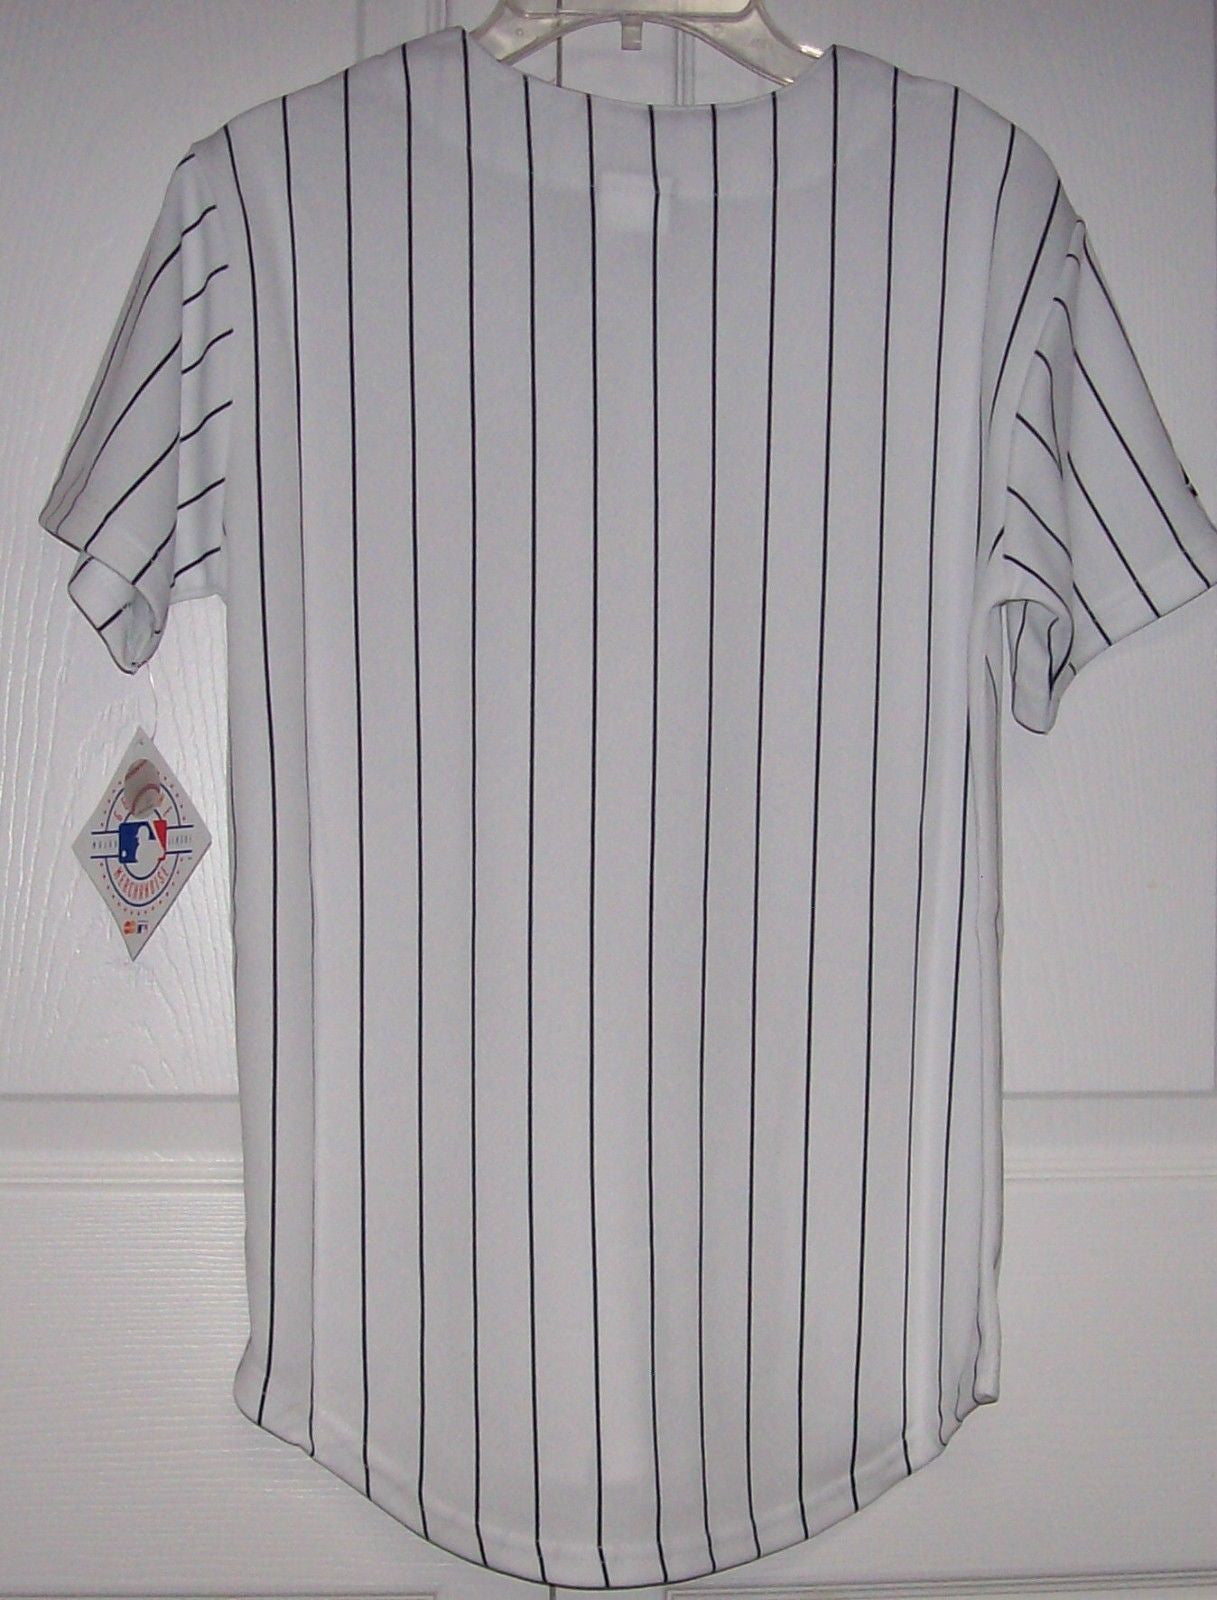 Chicago White Sox Boys Majestic MLB Baseball jersey Home White